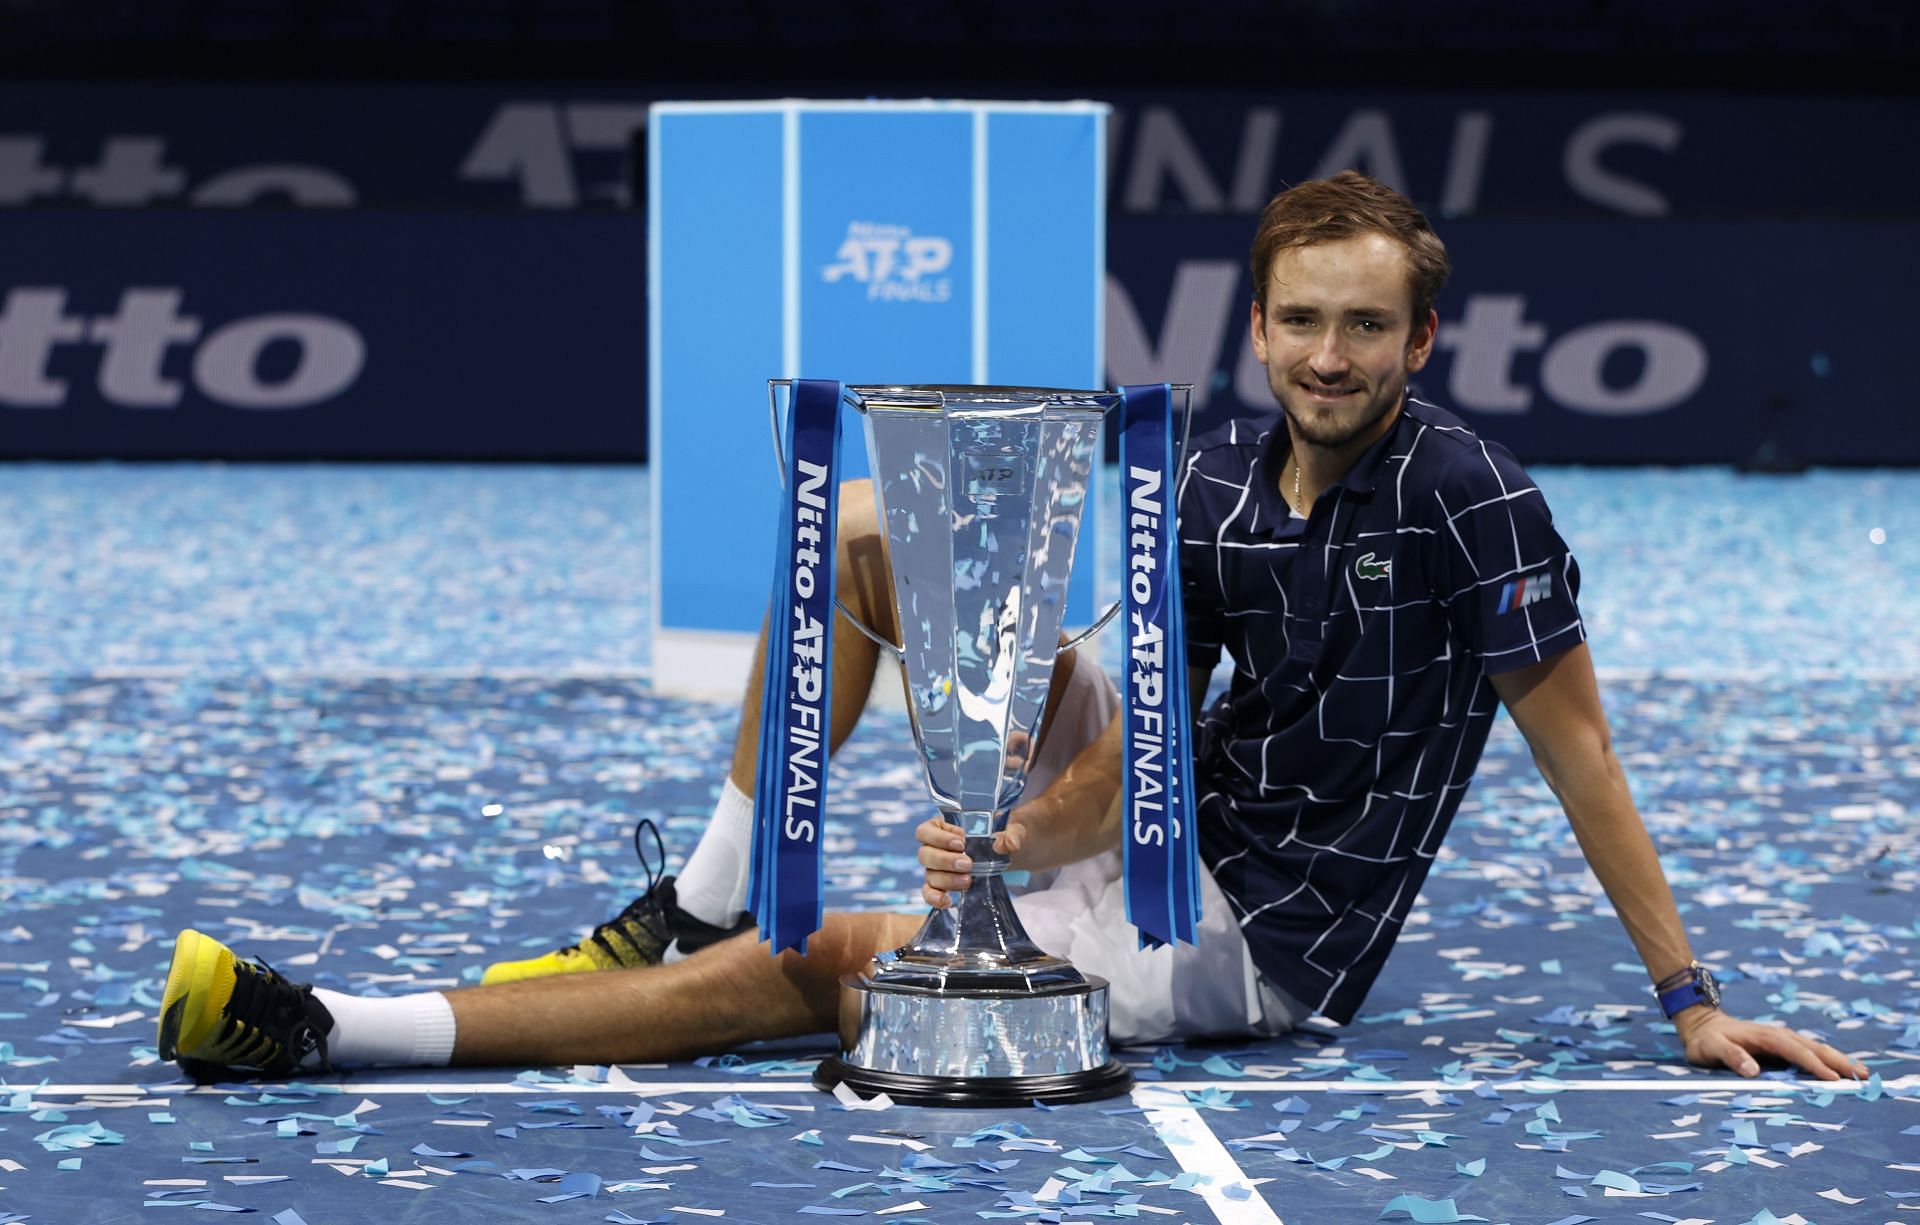 Daniil Medvedev won the 20220 Nitto ATP World Tour Finals